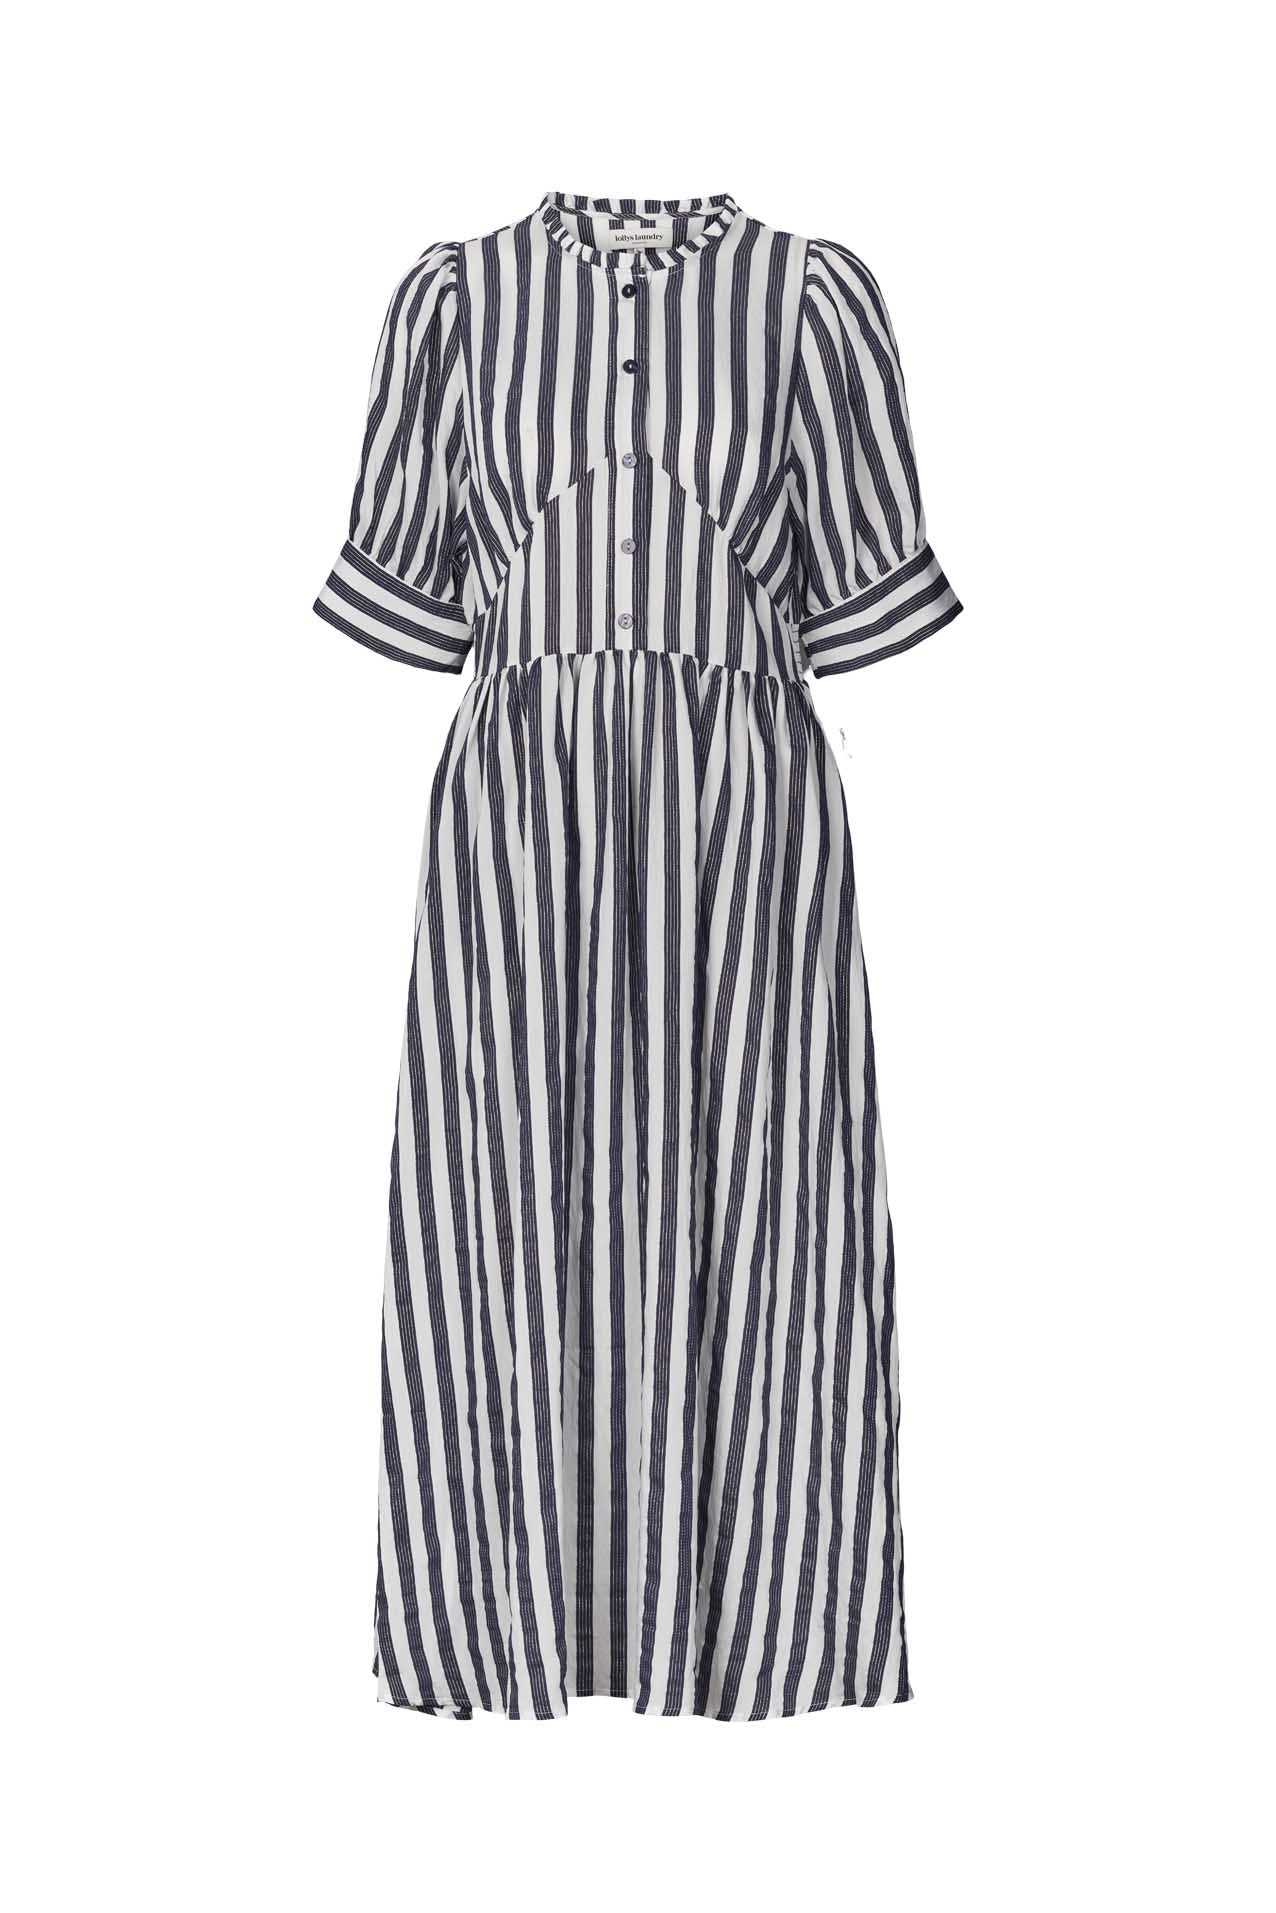 Lollys Laundry Boston Dress - Dark Blue Stripe